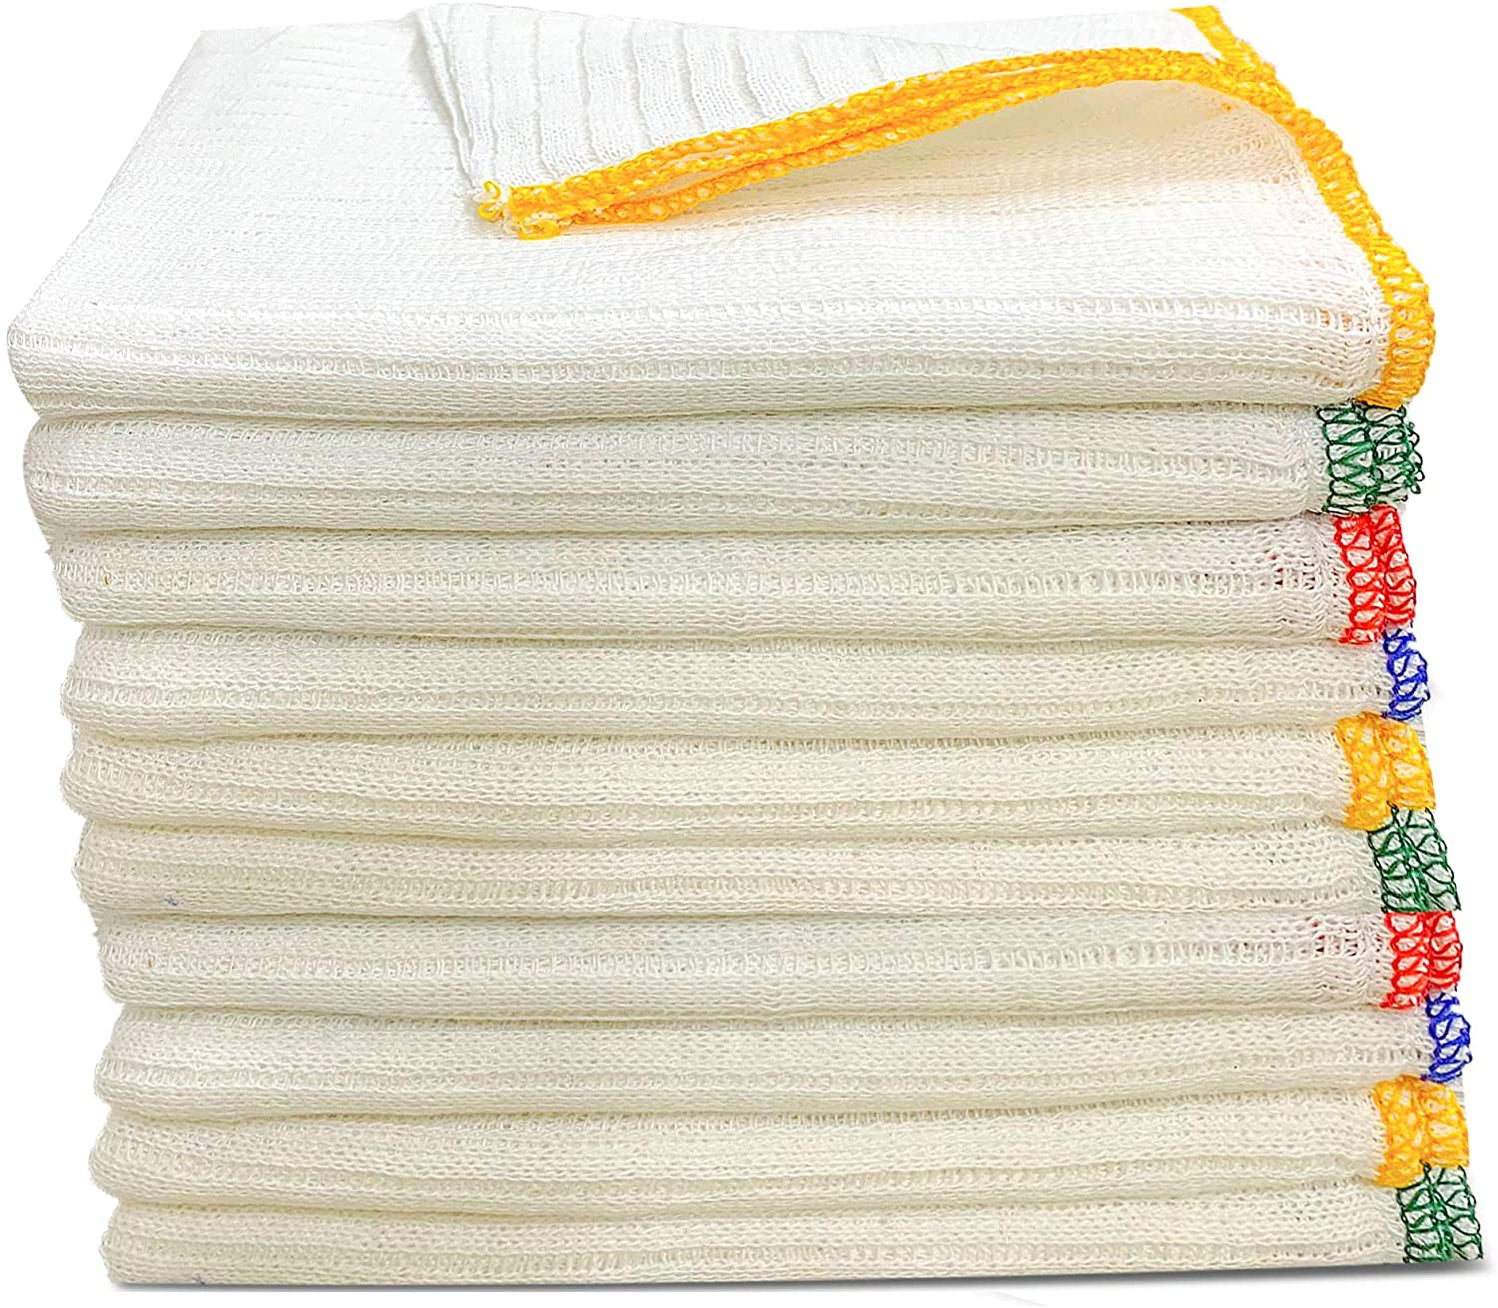 Cotton Dishcloths Cotton Dishcloths Heavy Duty Ribbed White Cloths 1 Db23c4e8 1bcb 4025 856a 1a0c0ef61df6 1498x1310 ?v=1613308107